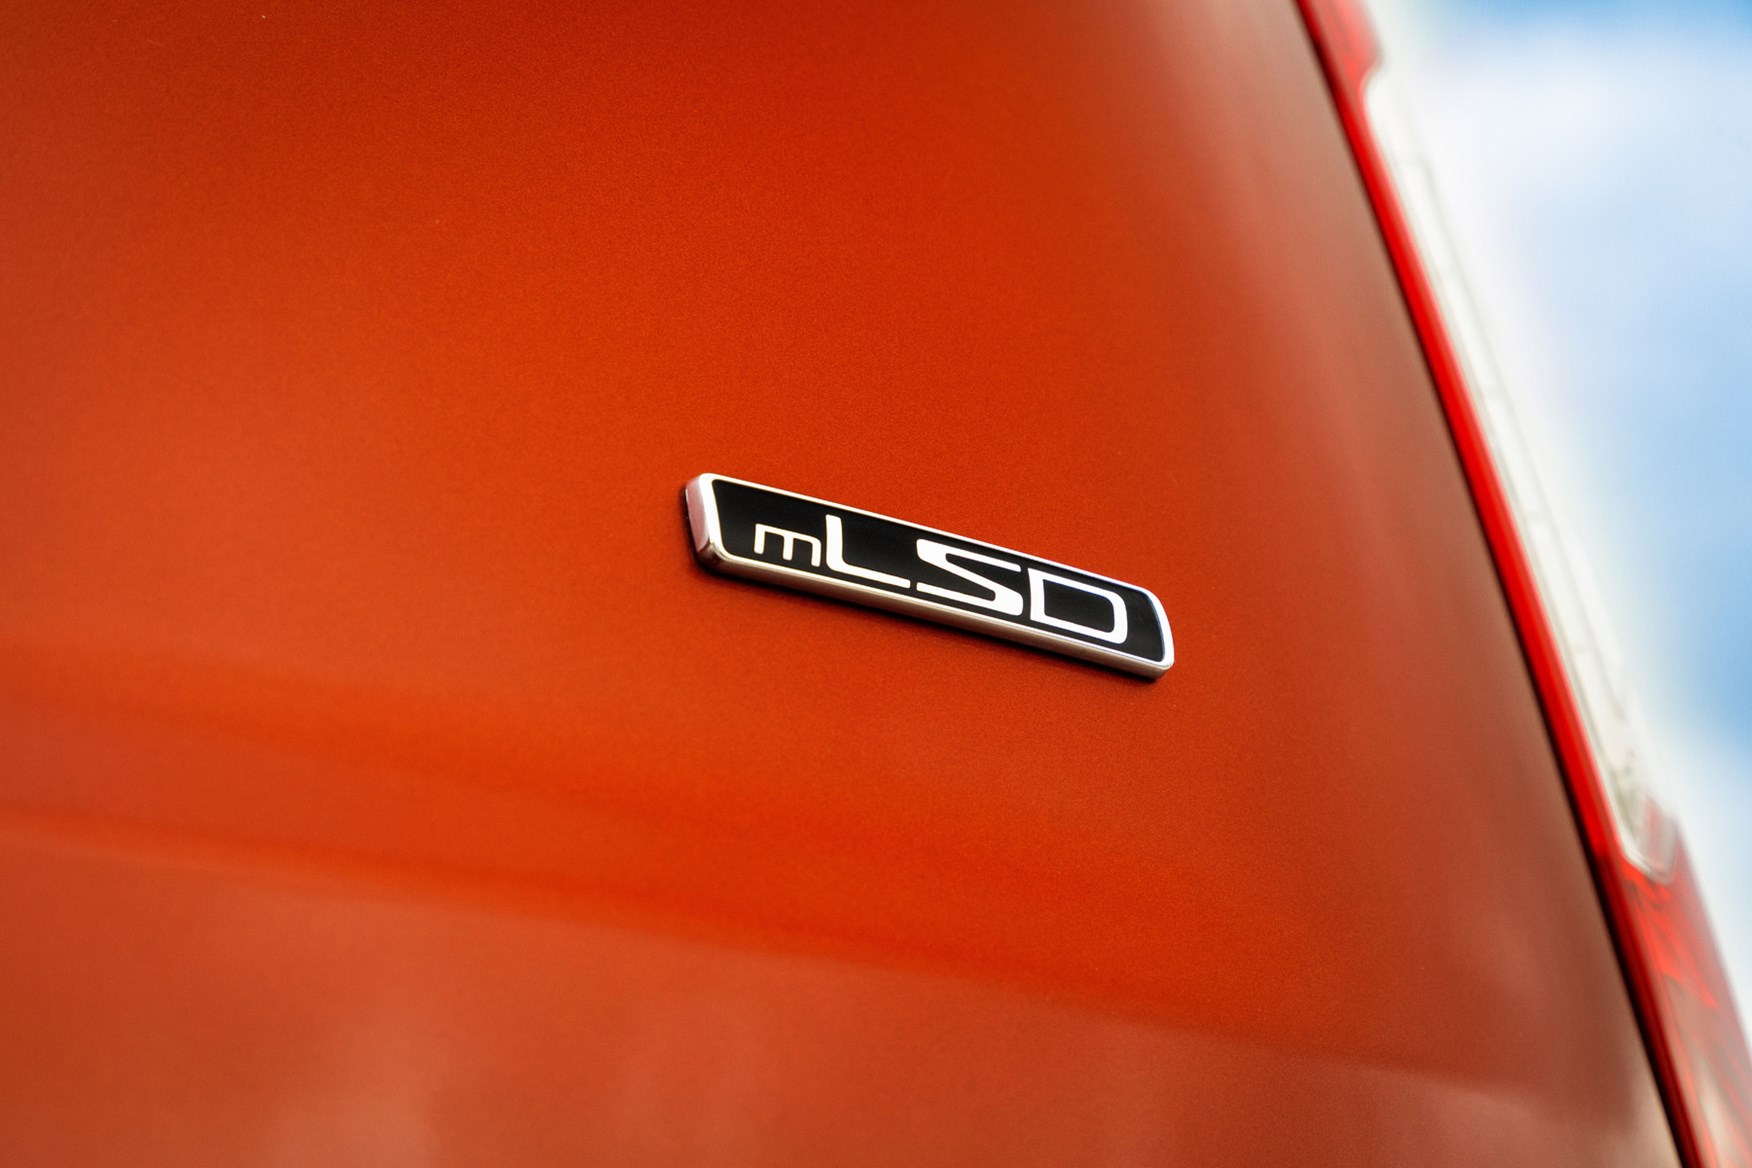 Ford Transit Connect Active review - Sedona Orange, mLSD badge